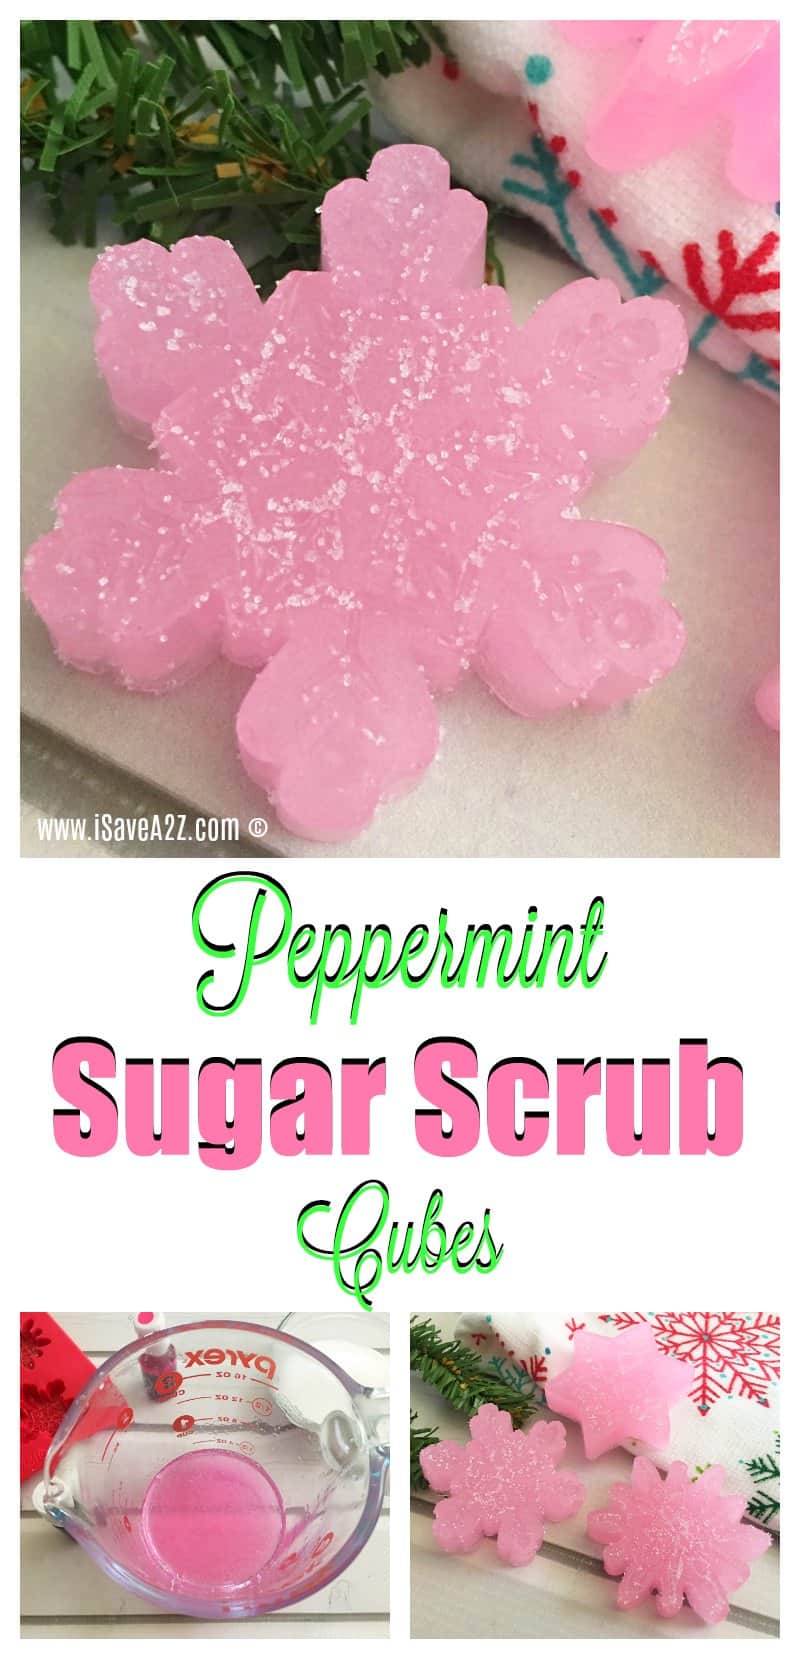 Peppermint Sugar Scrub Cubes